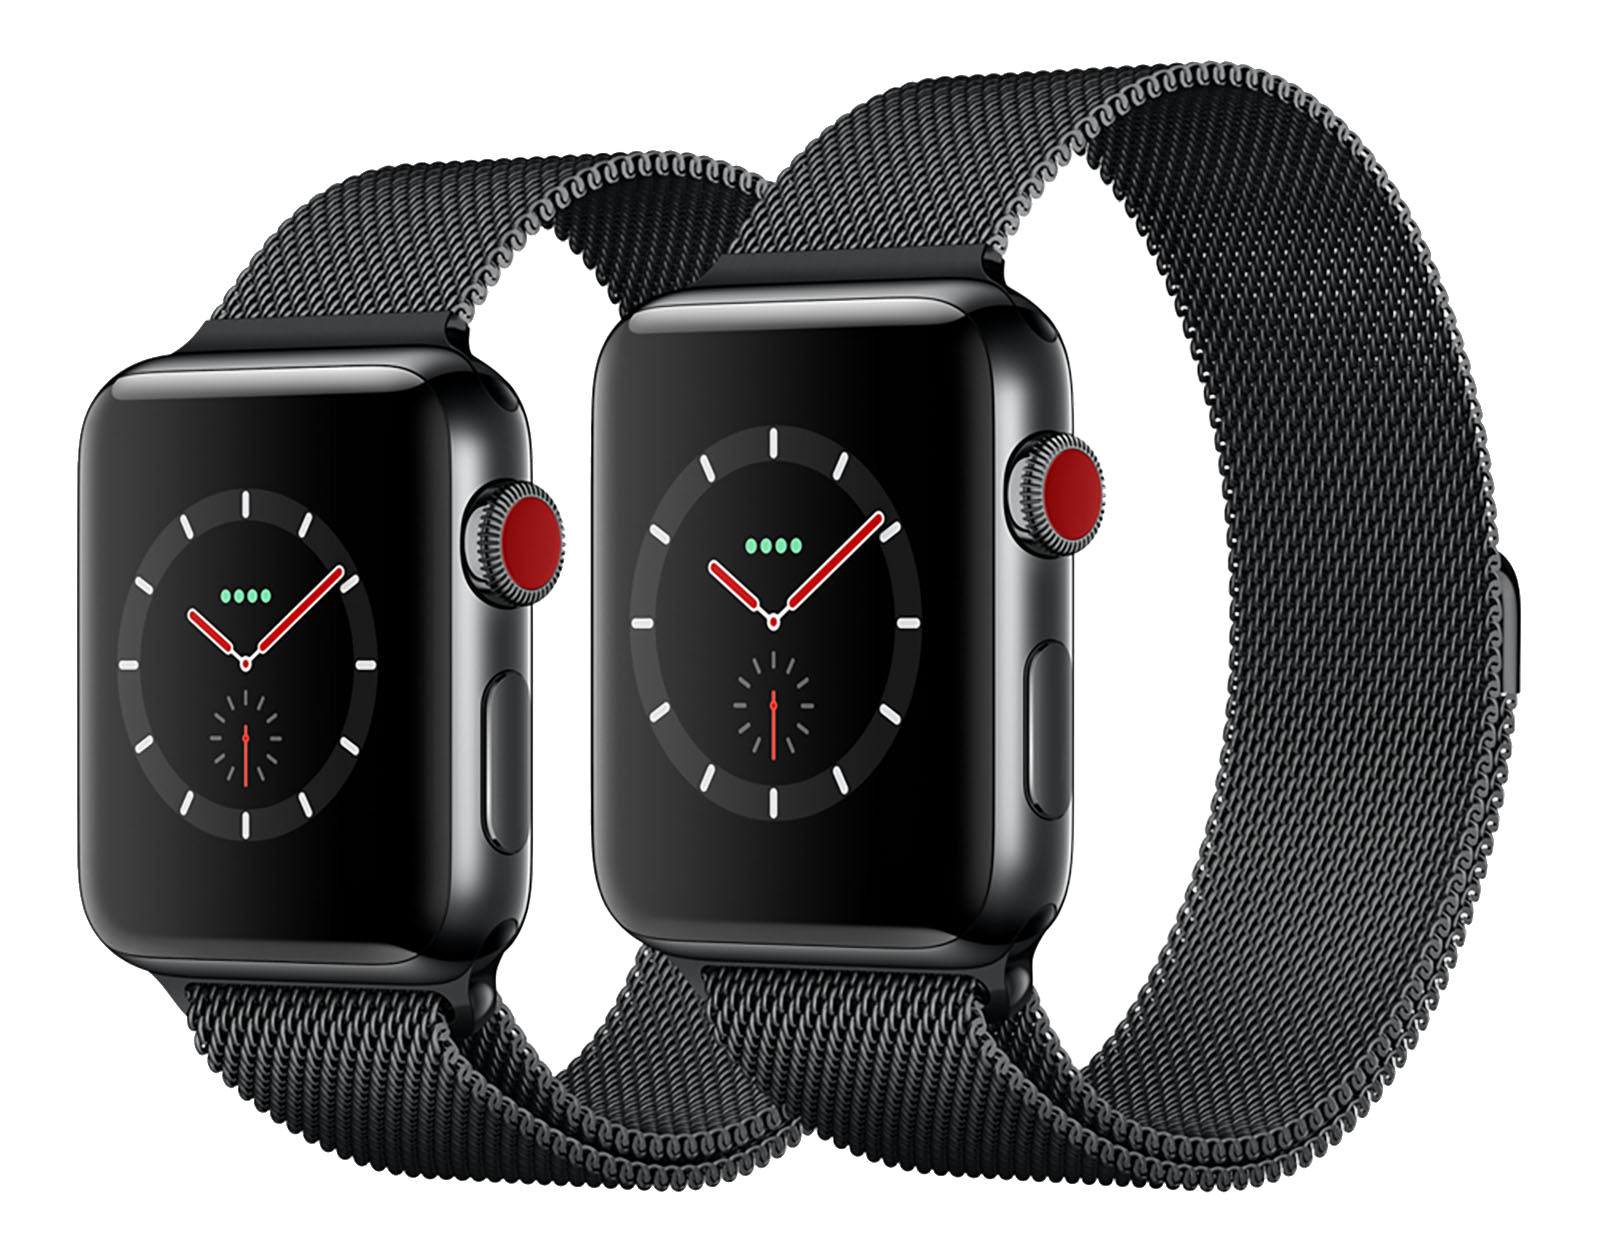 Best Apple Watch Series 3 MTGG2LL/A deals on GPS plus cellular models